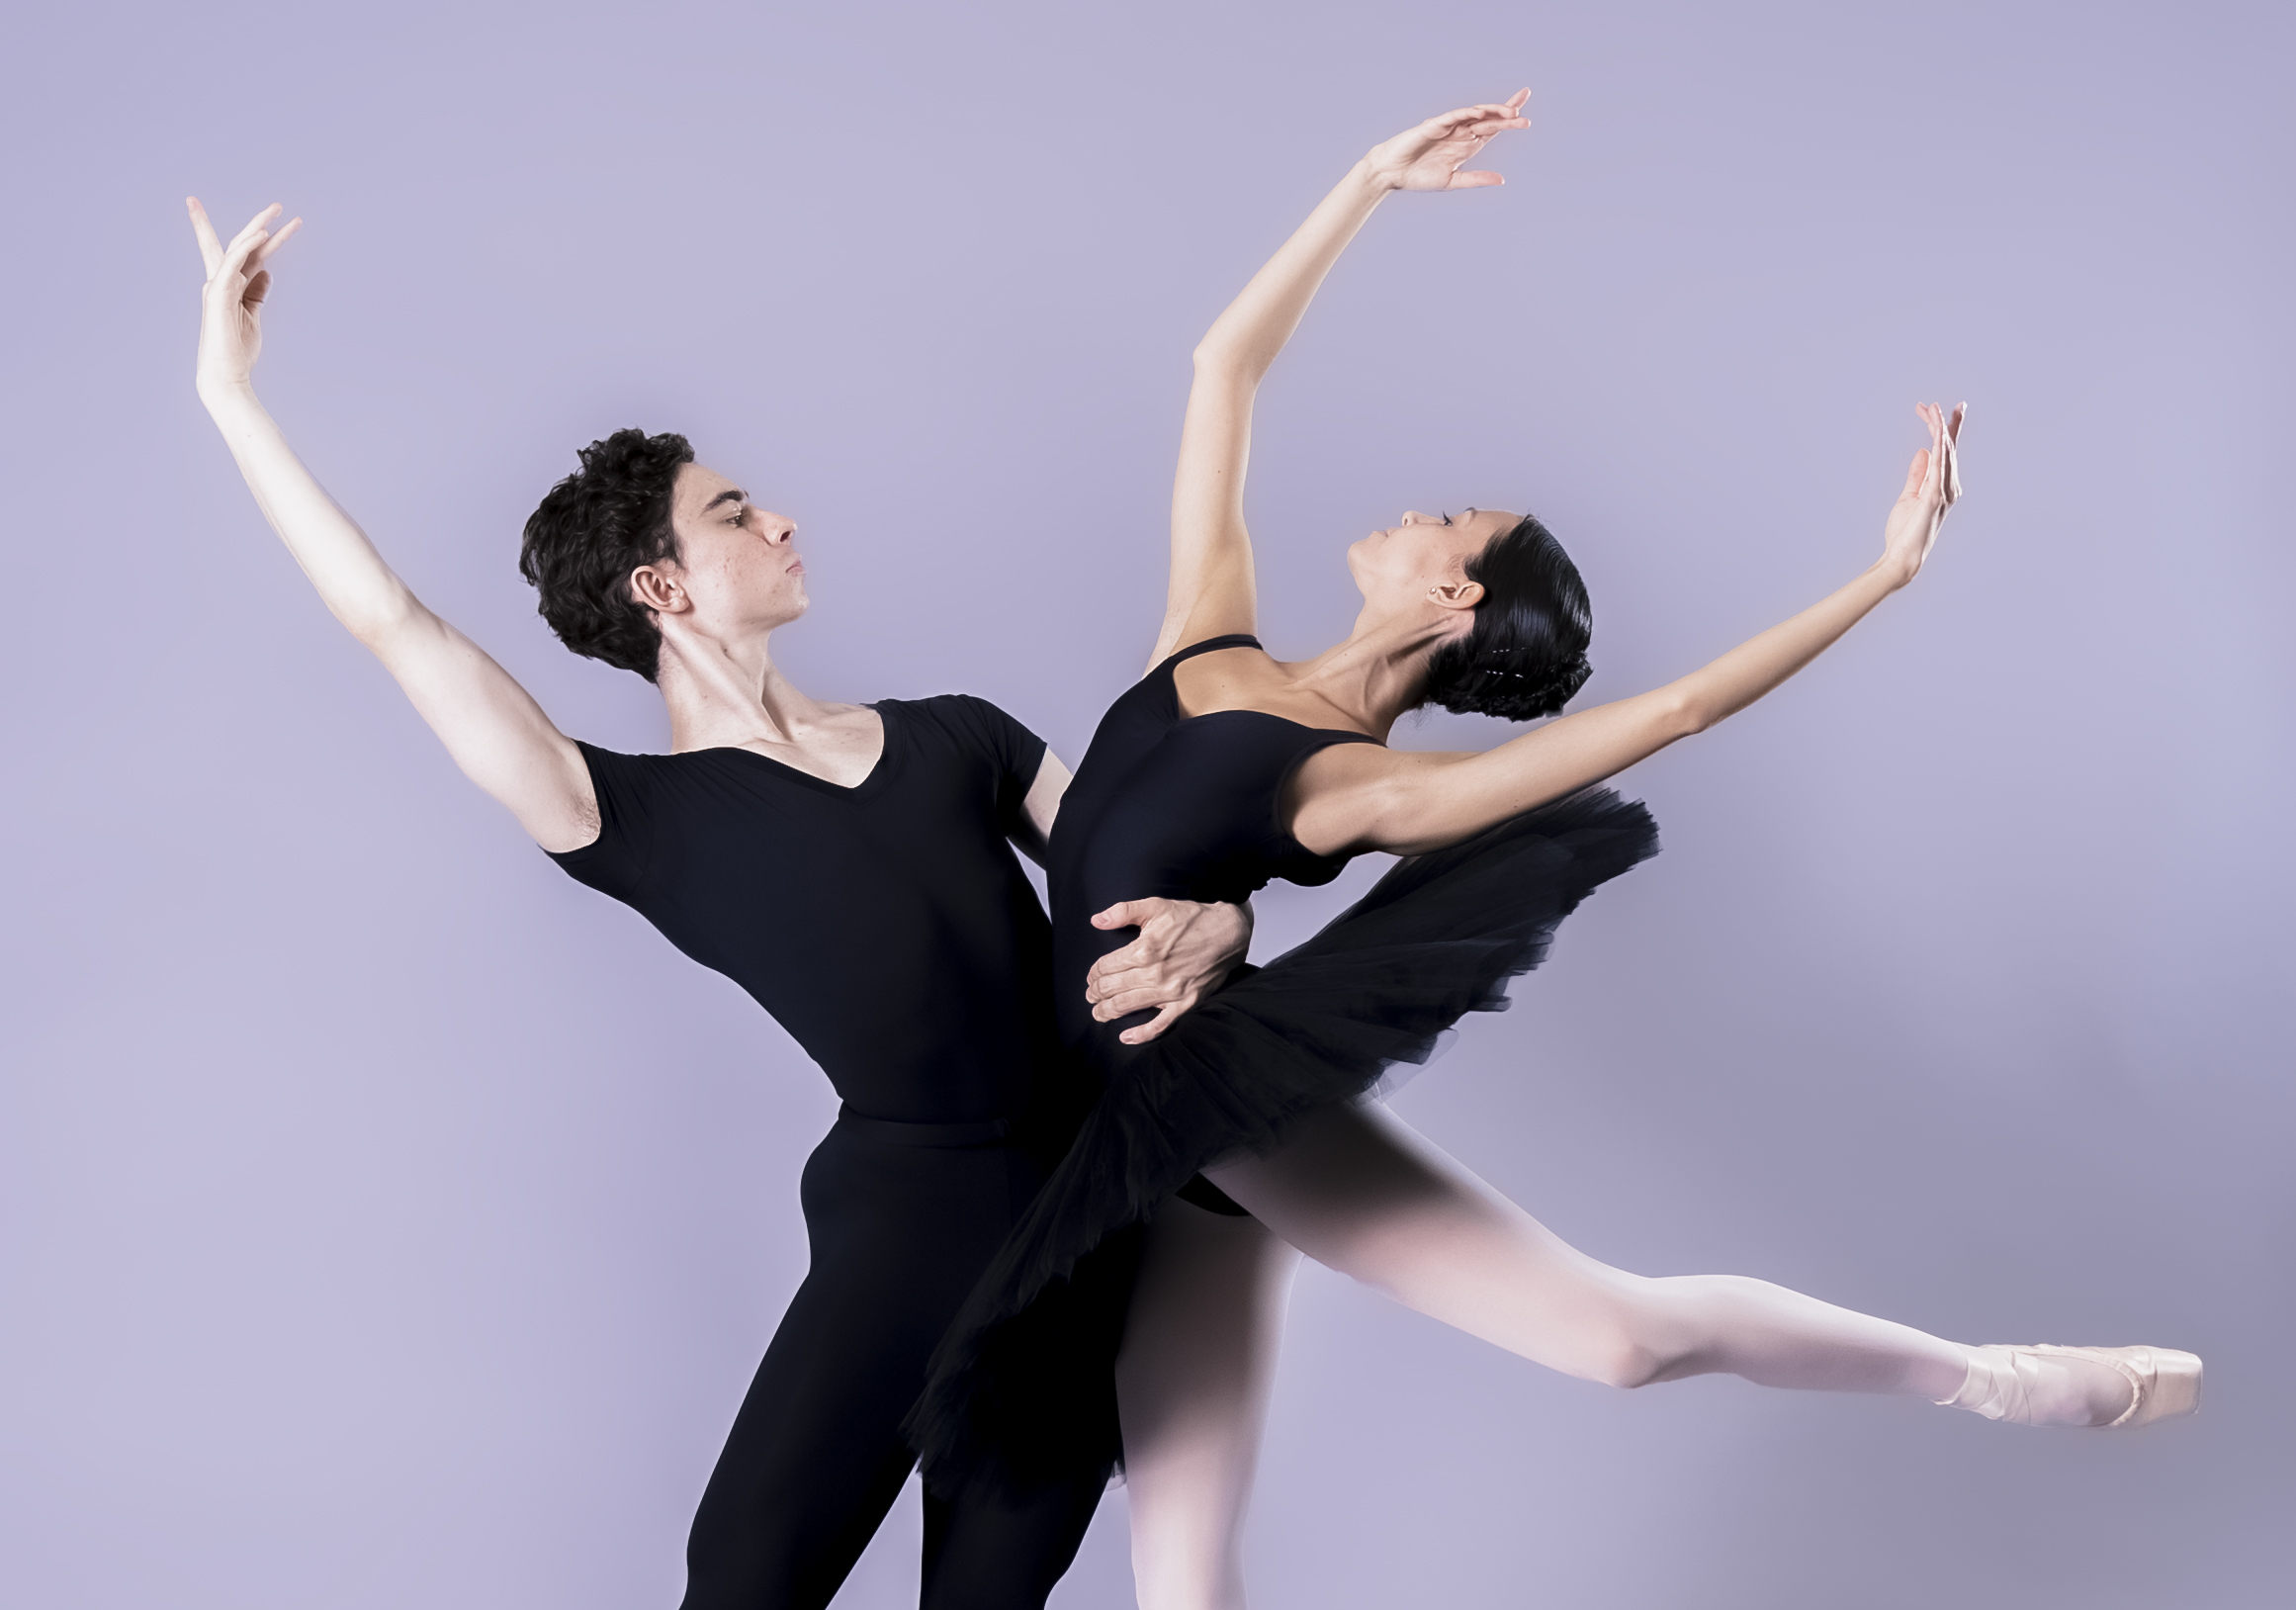 Dancers of tomorrow dutch national ballet academy